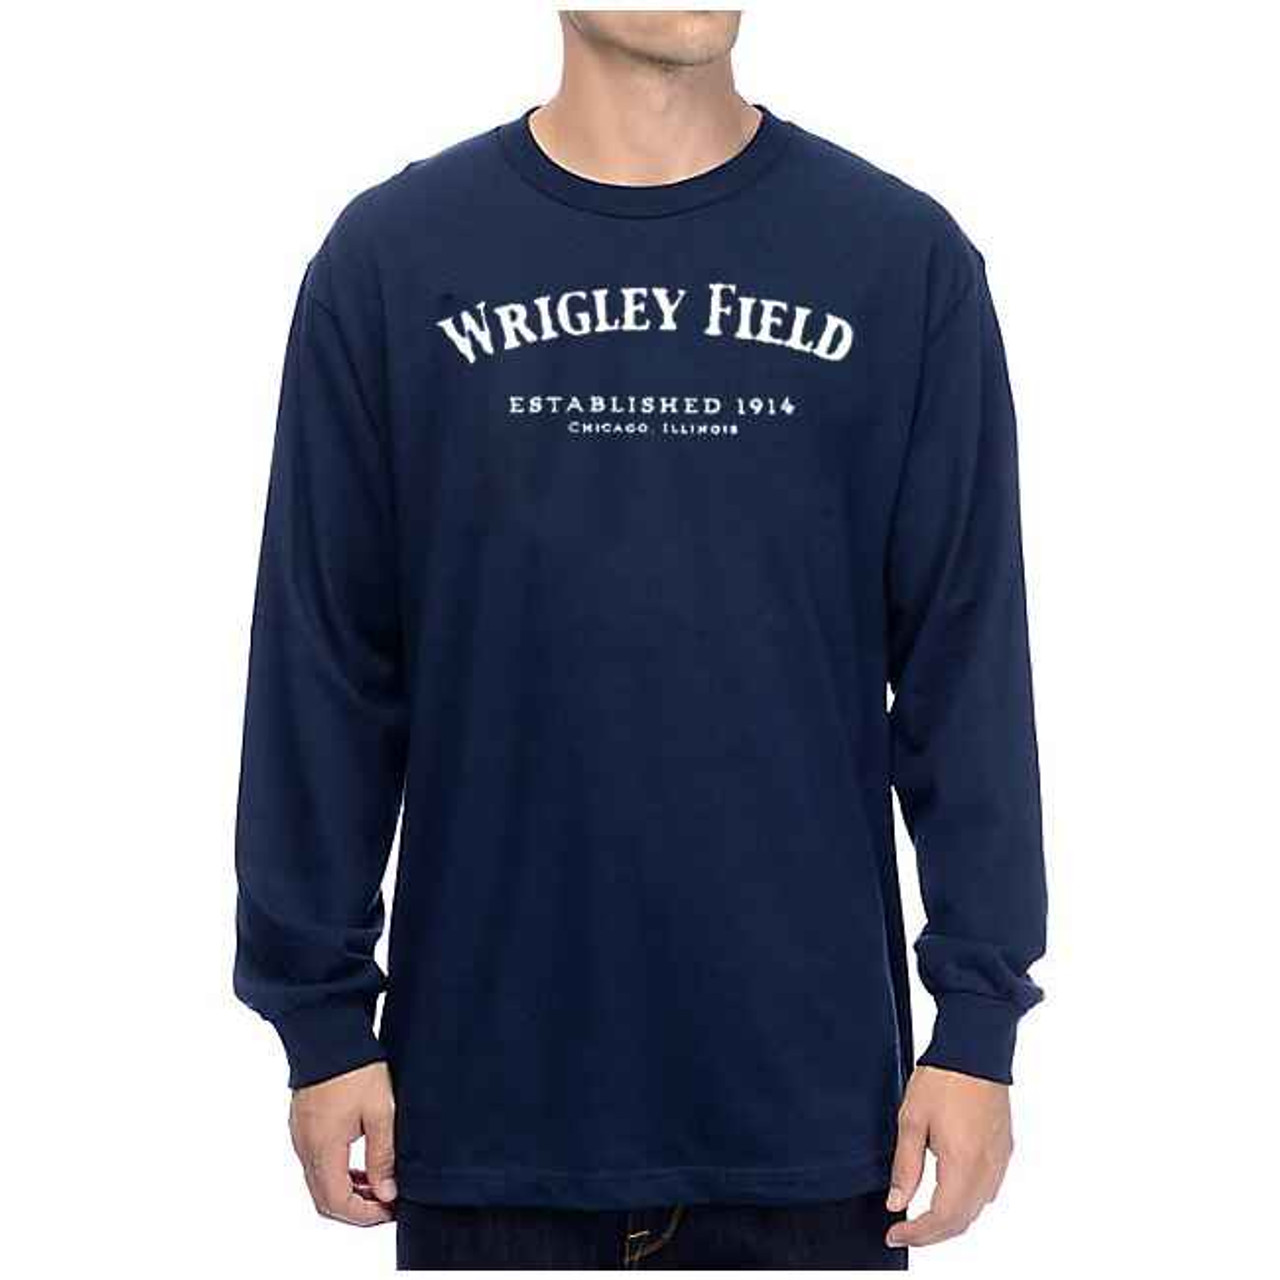 wrigley field t shirt